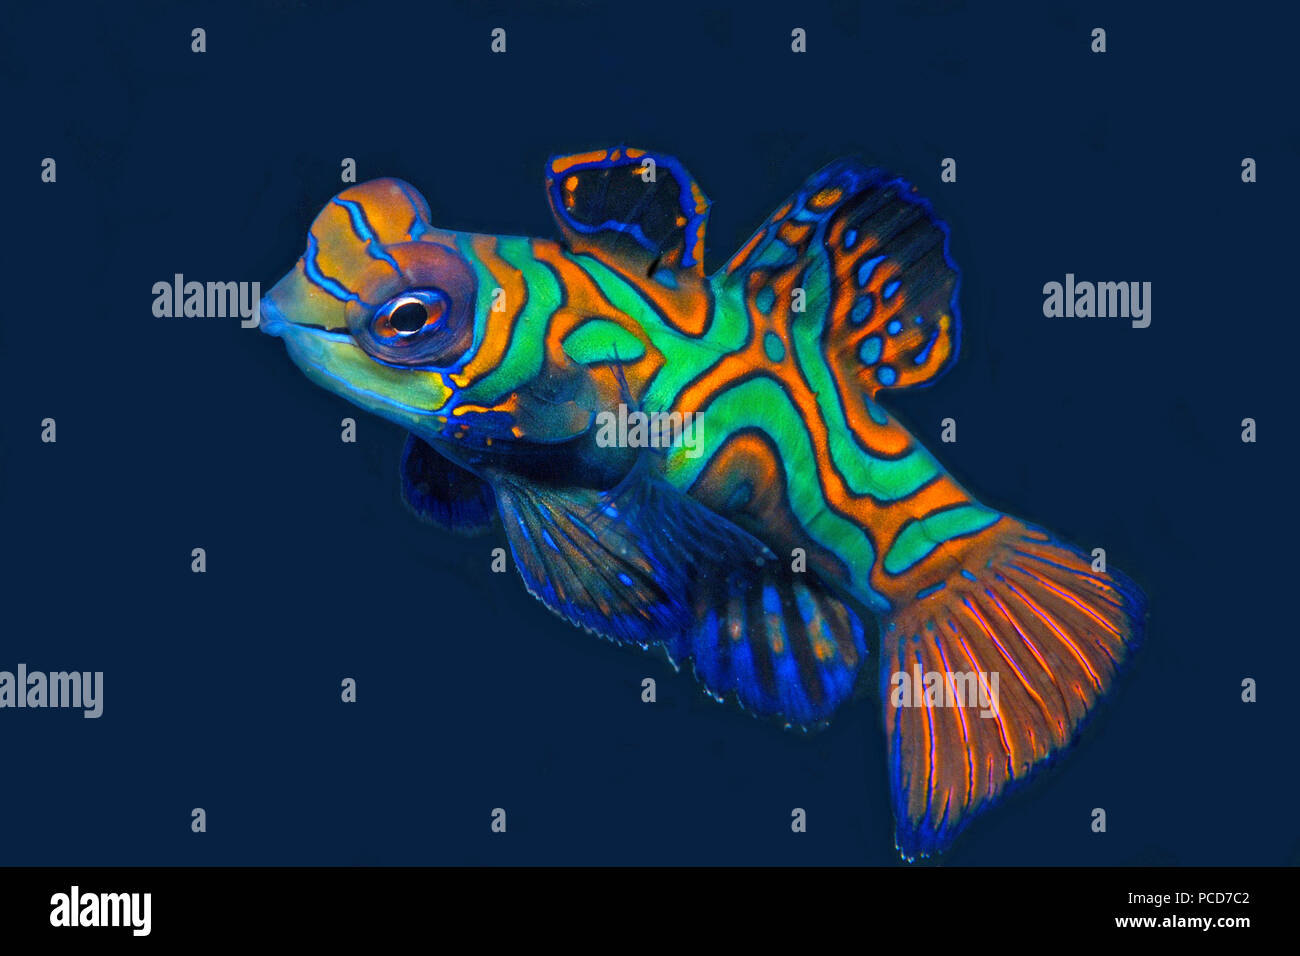 Mandarin-Leierfisch (Synchiropus splendidus), Yap, Mikronesien | dragonet Mandarinfish o mandarín (Synchiropus splendidus), Islas Yap Micronesia Foto de stock